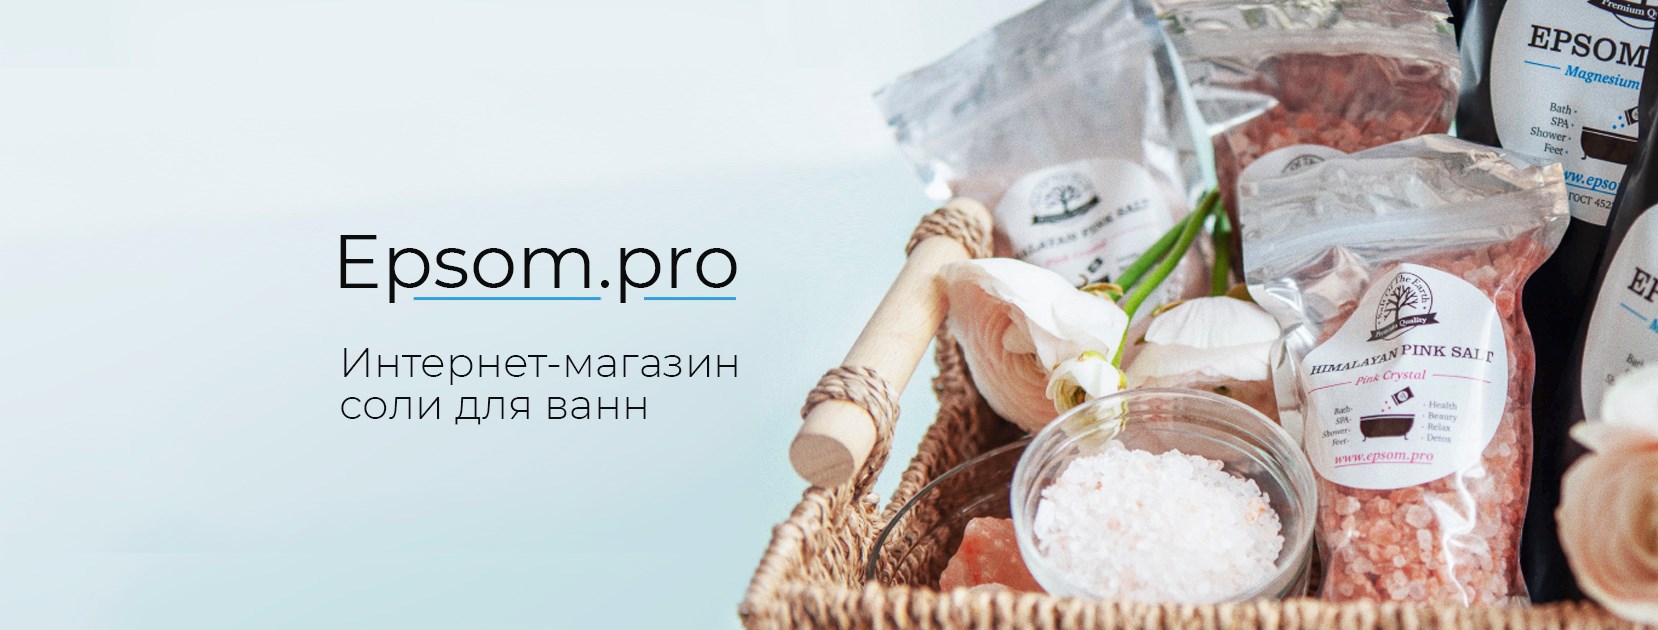 Доставка Boxberry бесплатно при заказе от 3000 рублей!